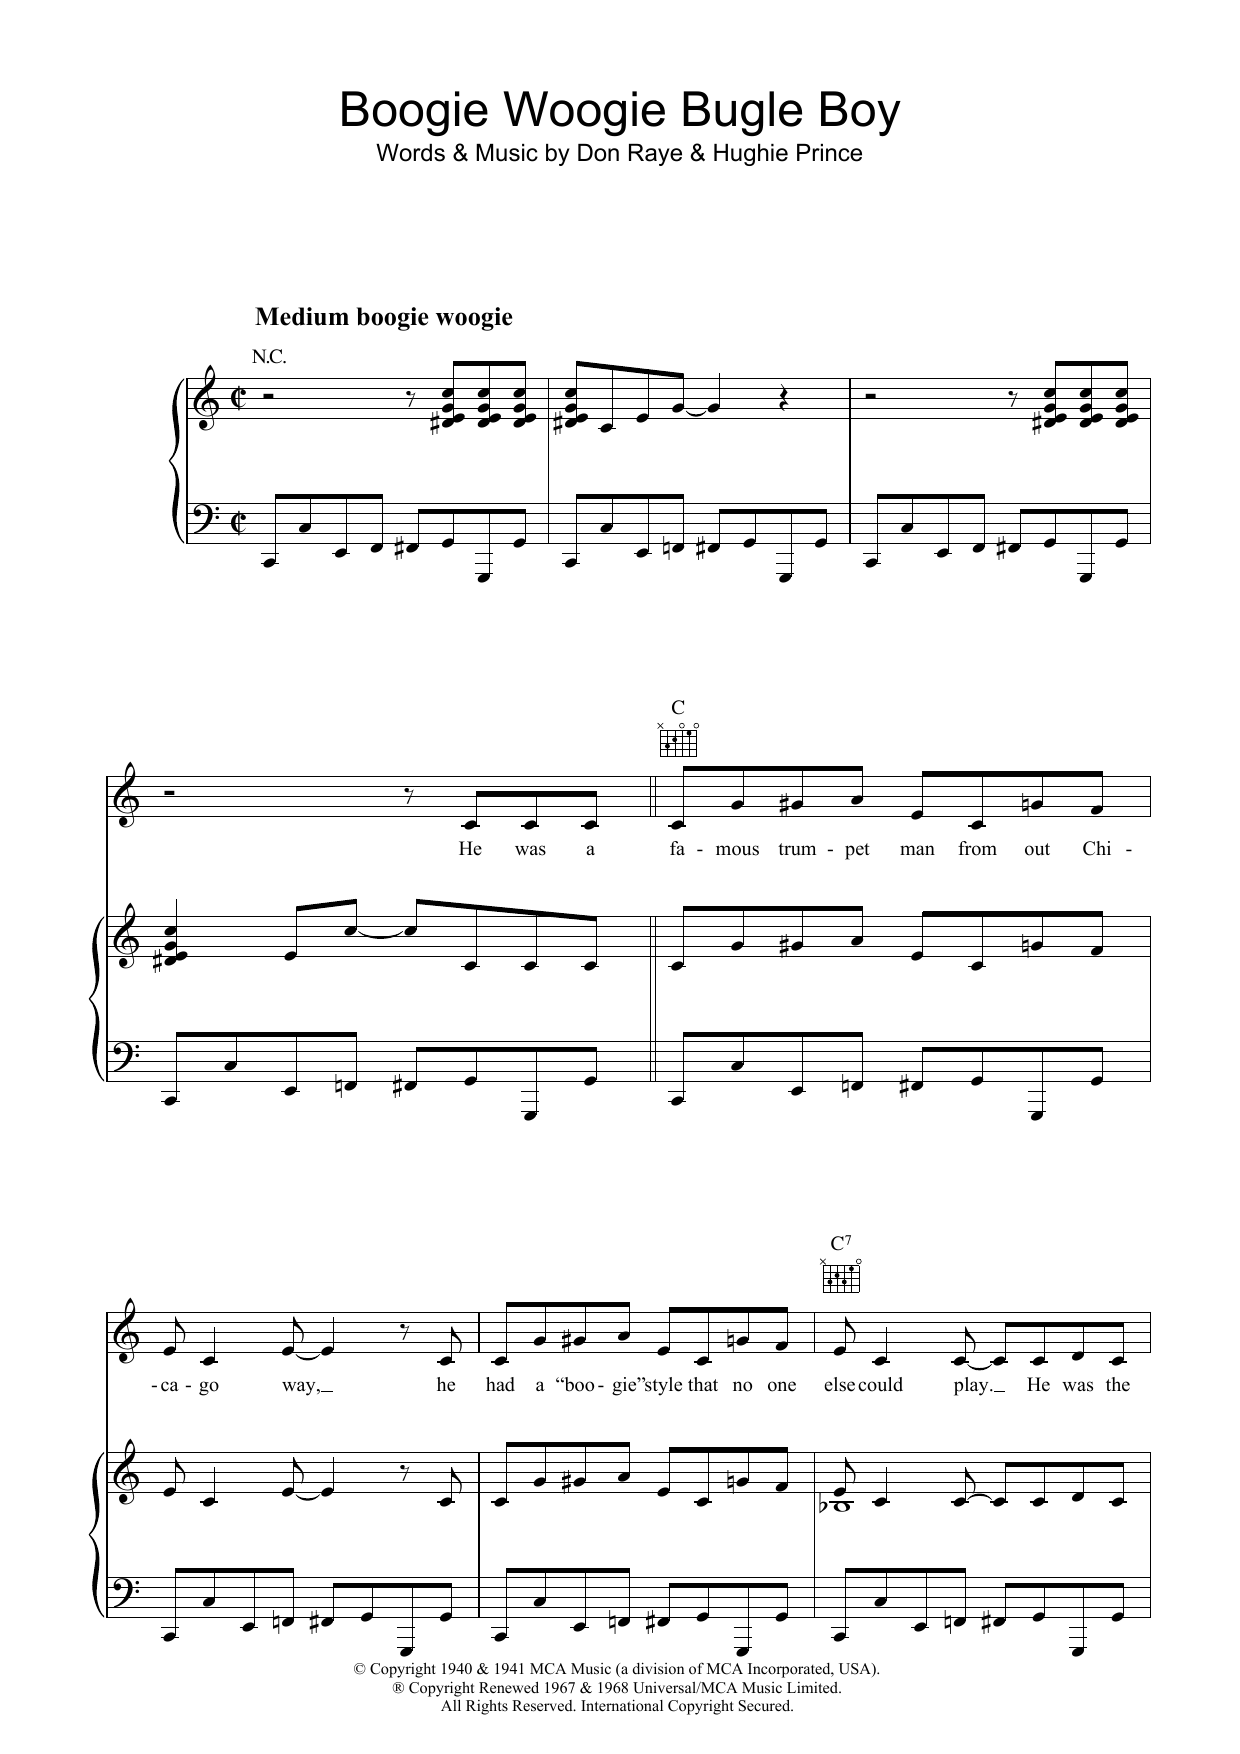 Don Raye Boogie Woogie Bugle Boy Sheet Music Notes & Chords for Ukulele - Download or Print PDF